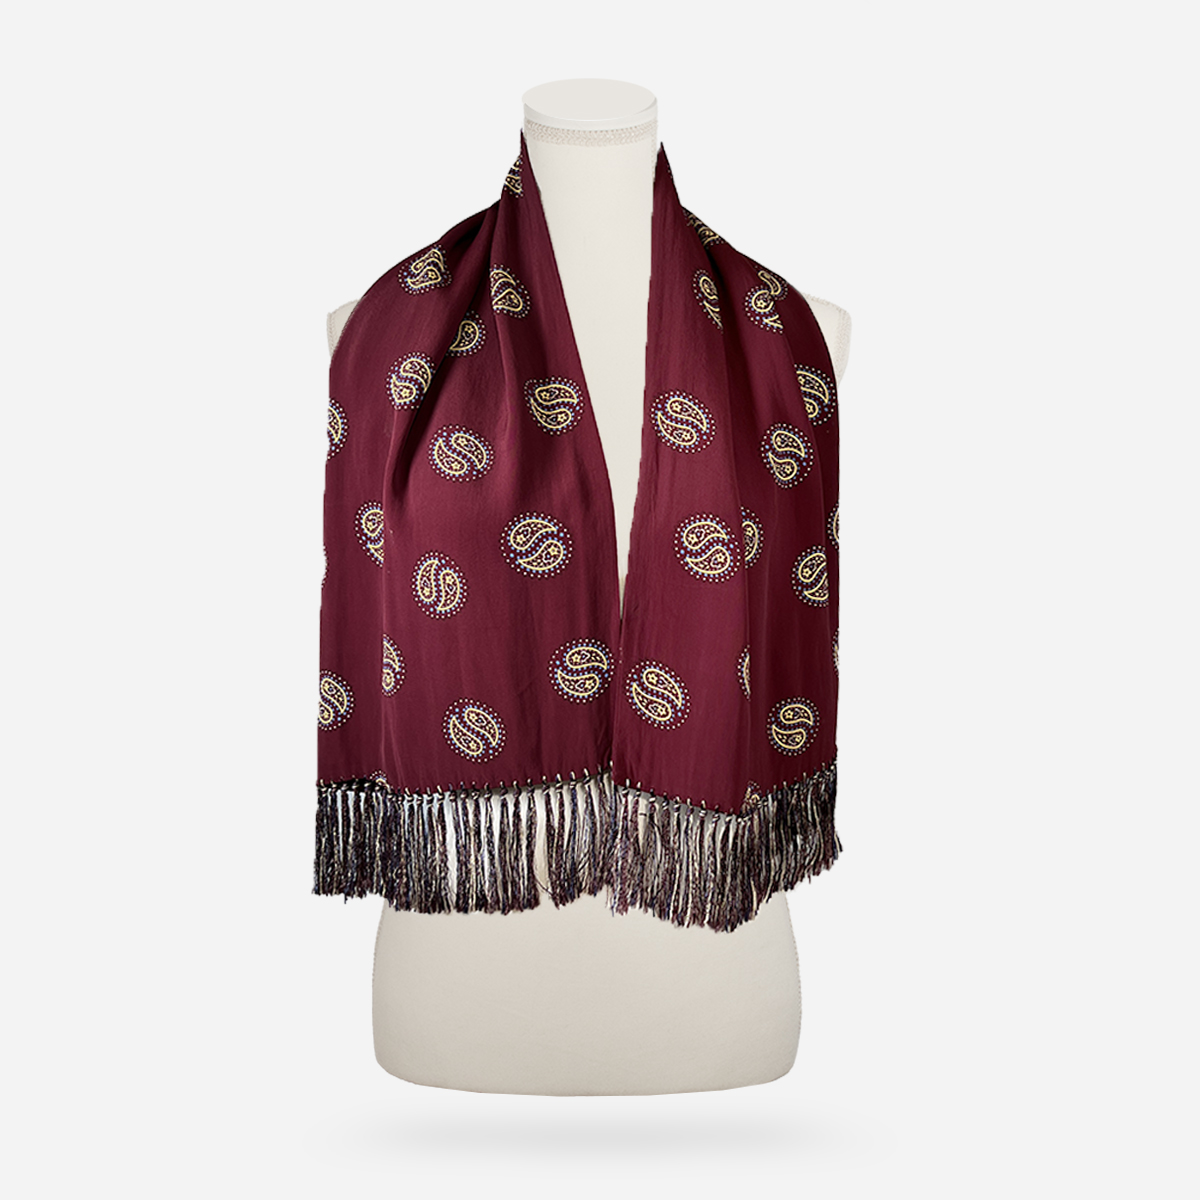 long burgundy scarf with fringe